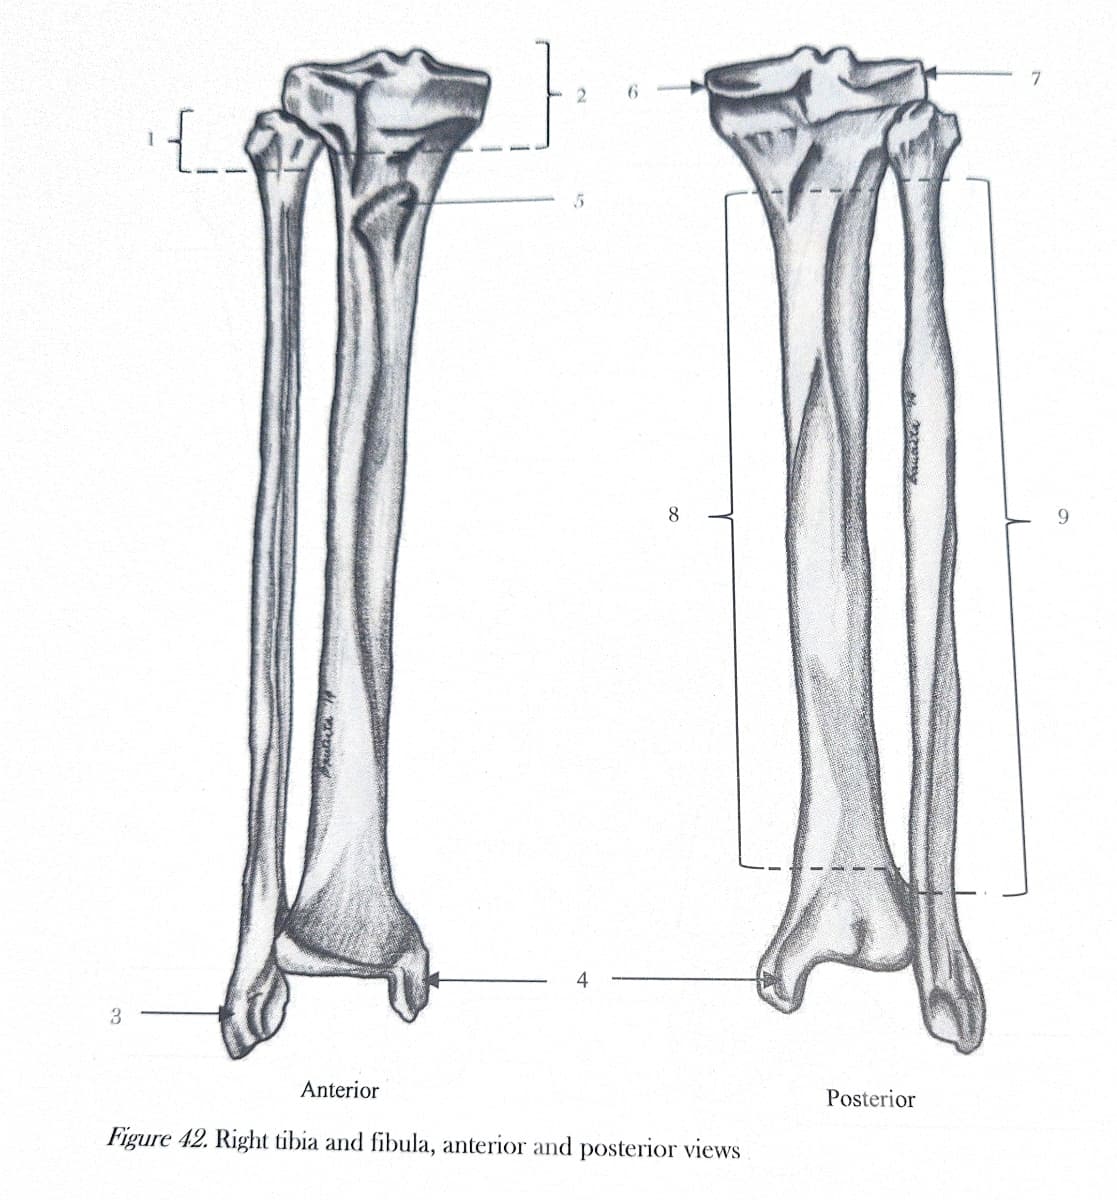 3
{___
putinin
6
8
Anterior
Figure 42. Right tibia and fibula, anterior and posterior views
Baunsla
Posterior
7
9